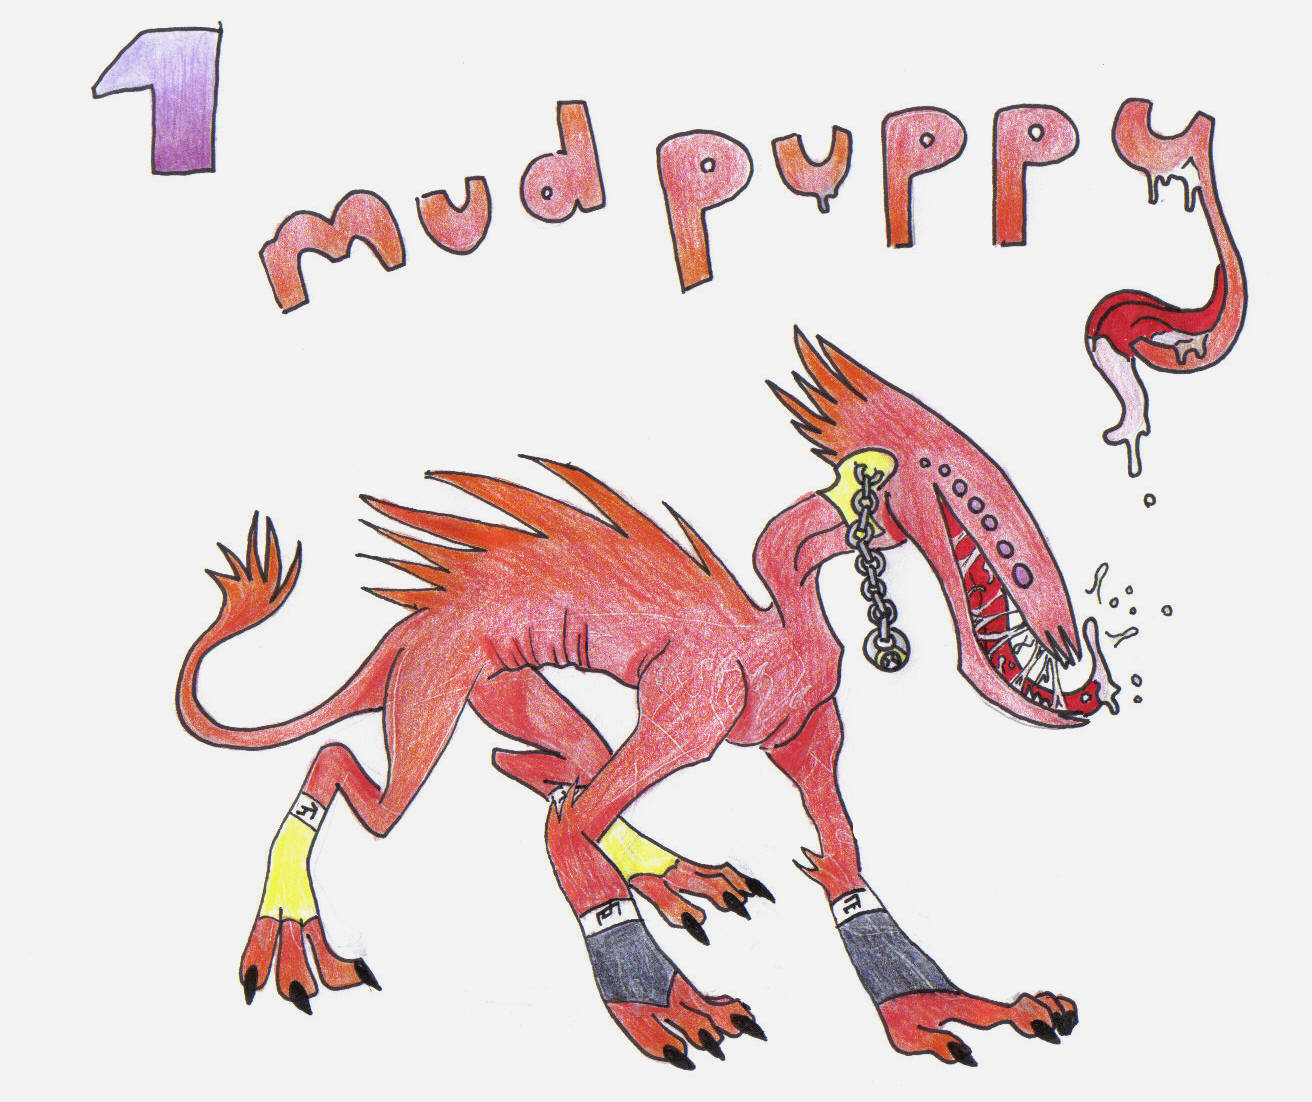 My Alien character Mudpuppy by XLR810